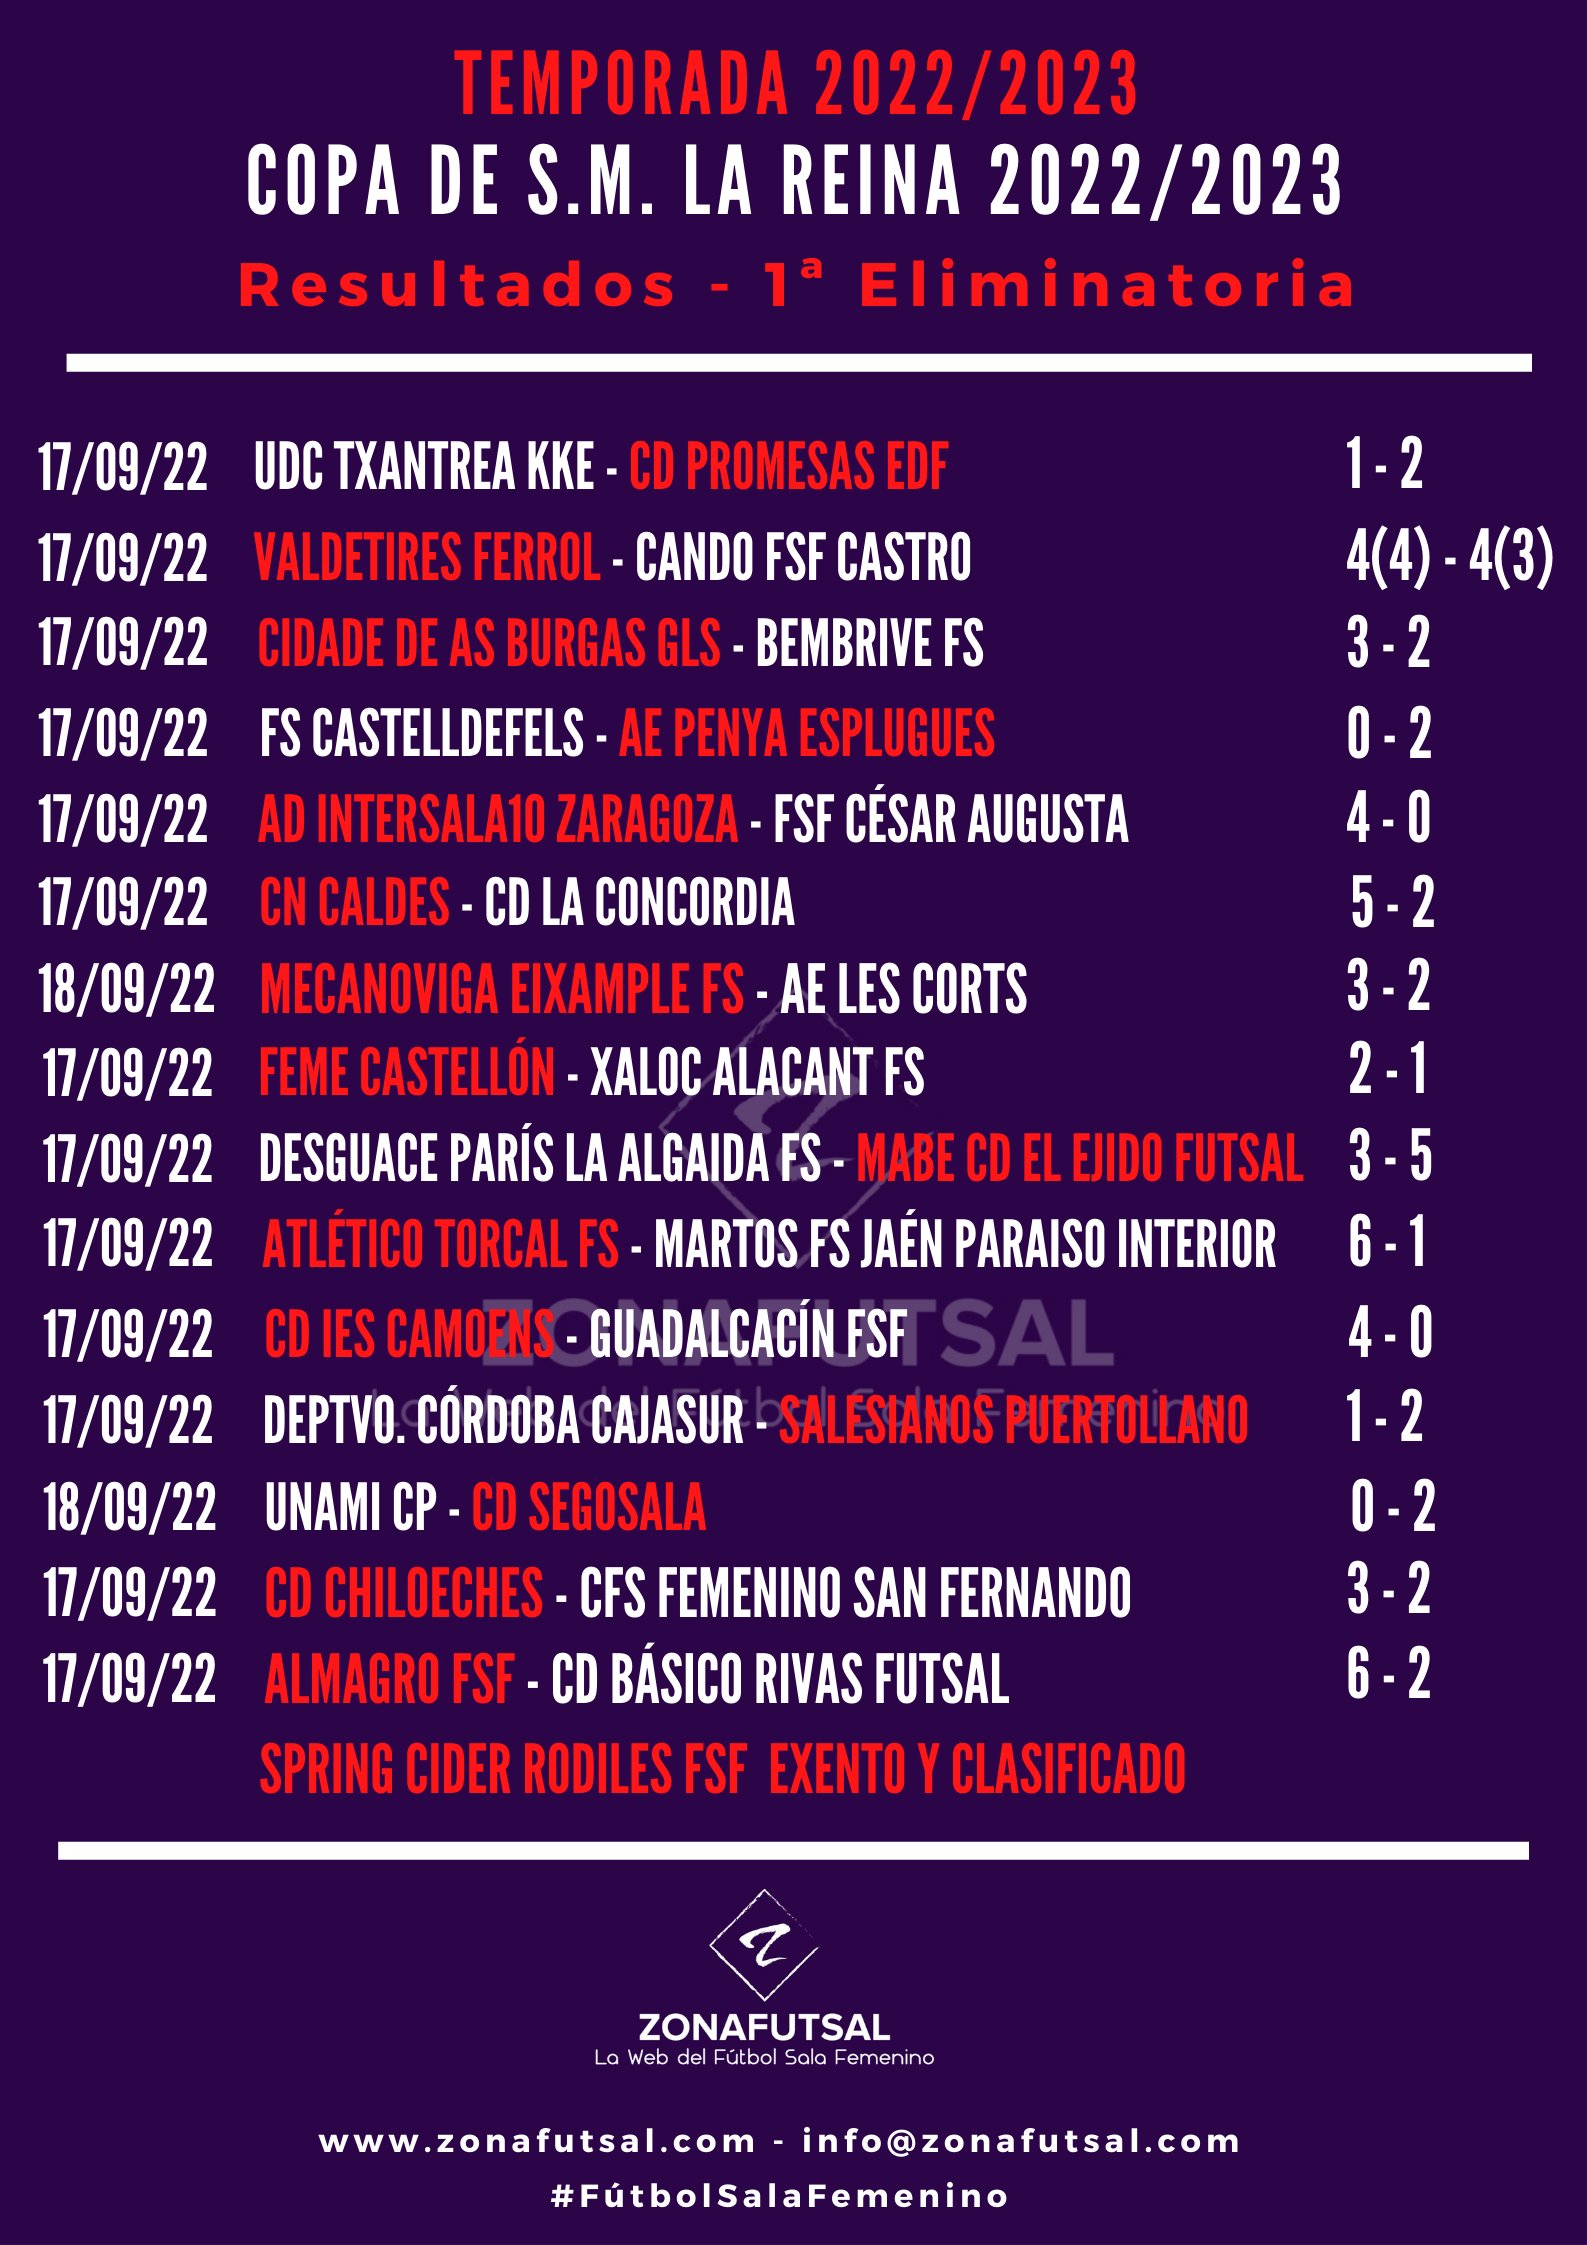 Resultados de la 1ª Eliminatoria de la Copa de la Reina de Fútbol Sala Femenino. Temporada 2022/2023